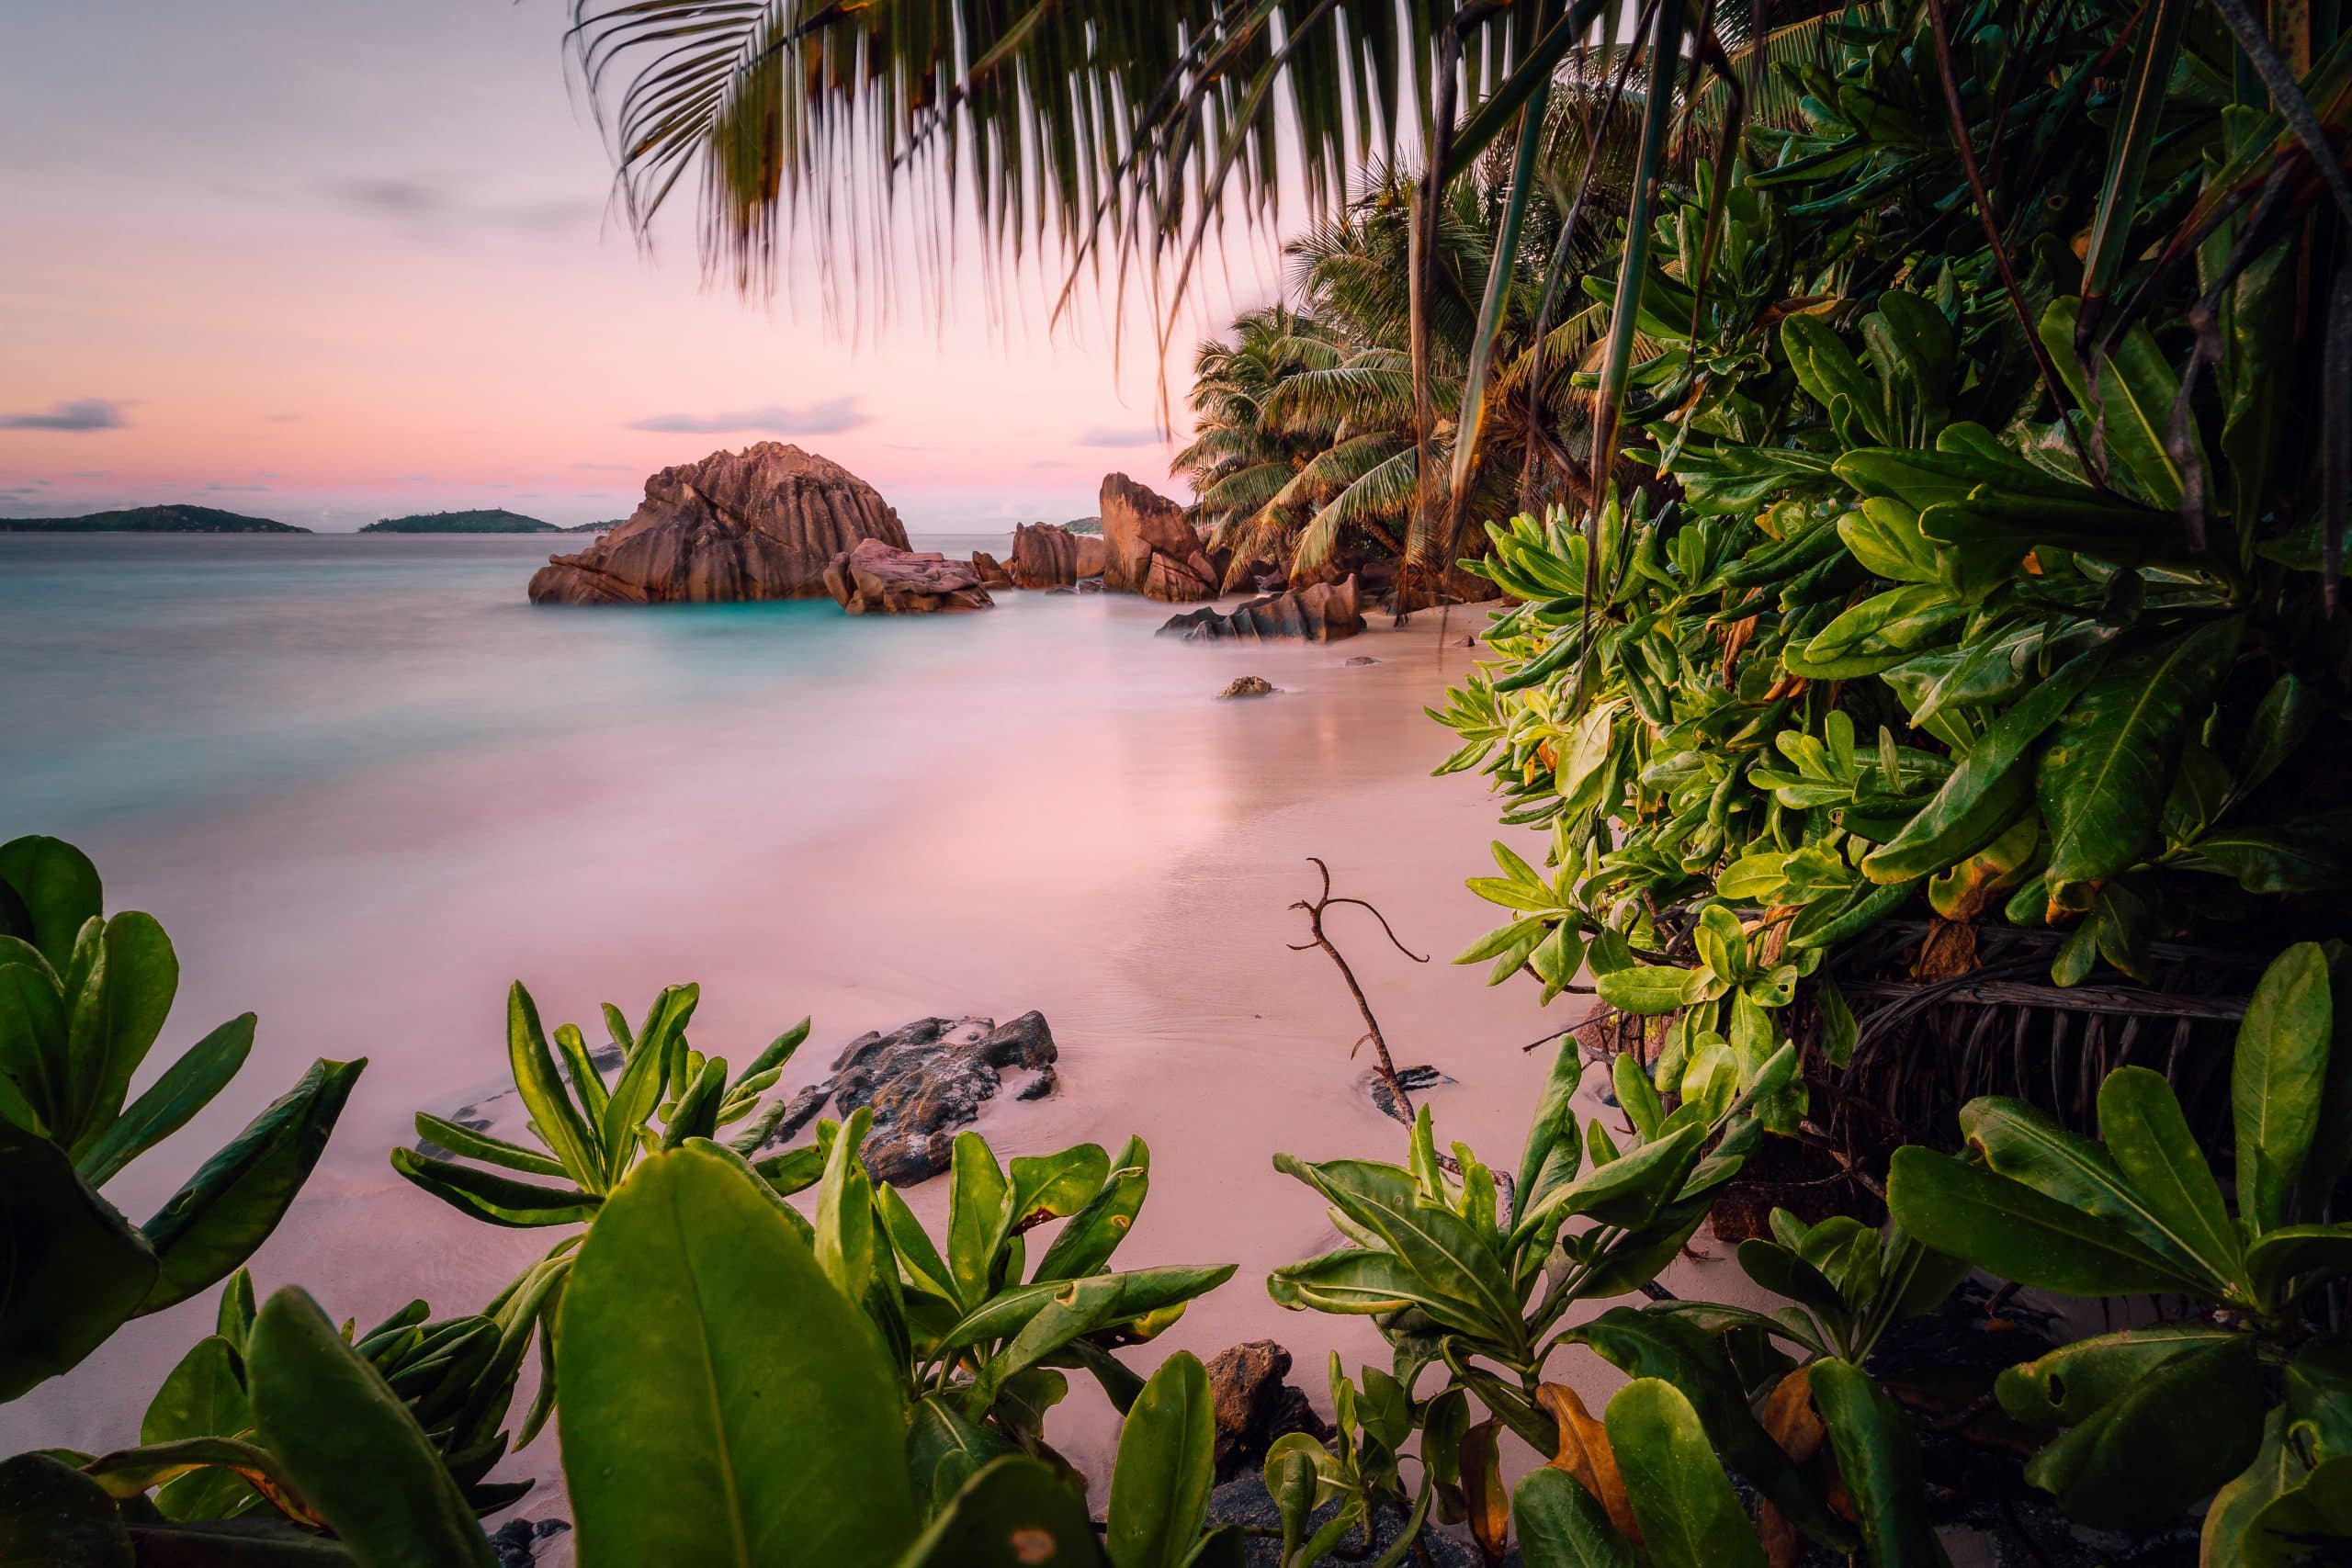 Seychelles La Digue Island